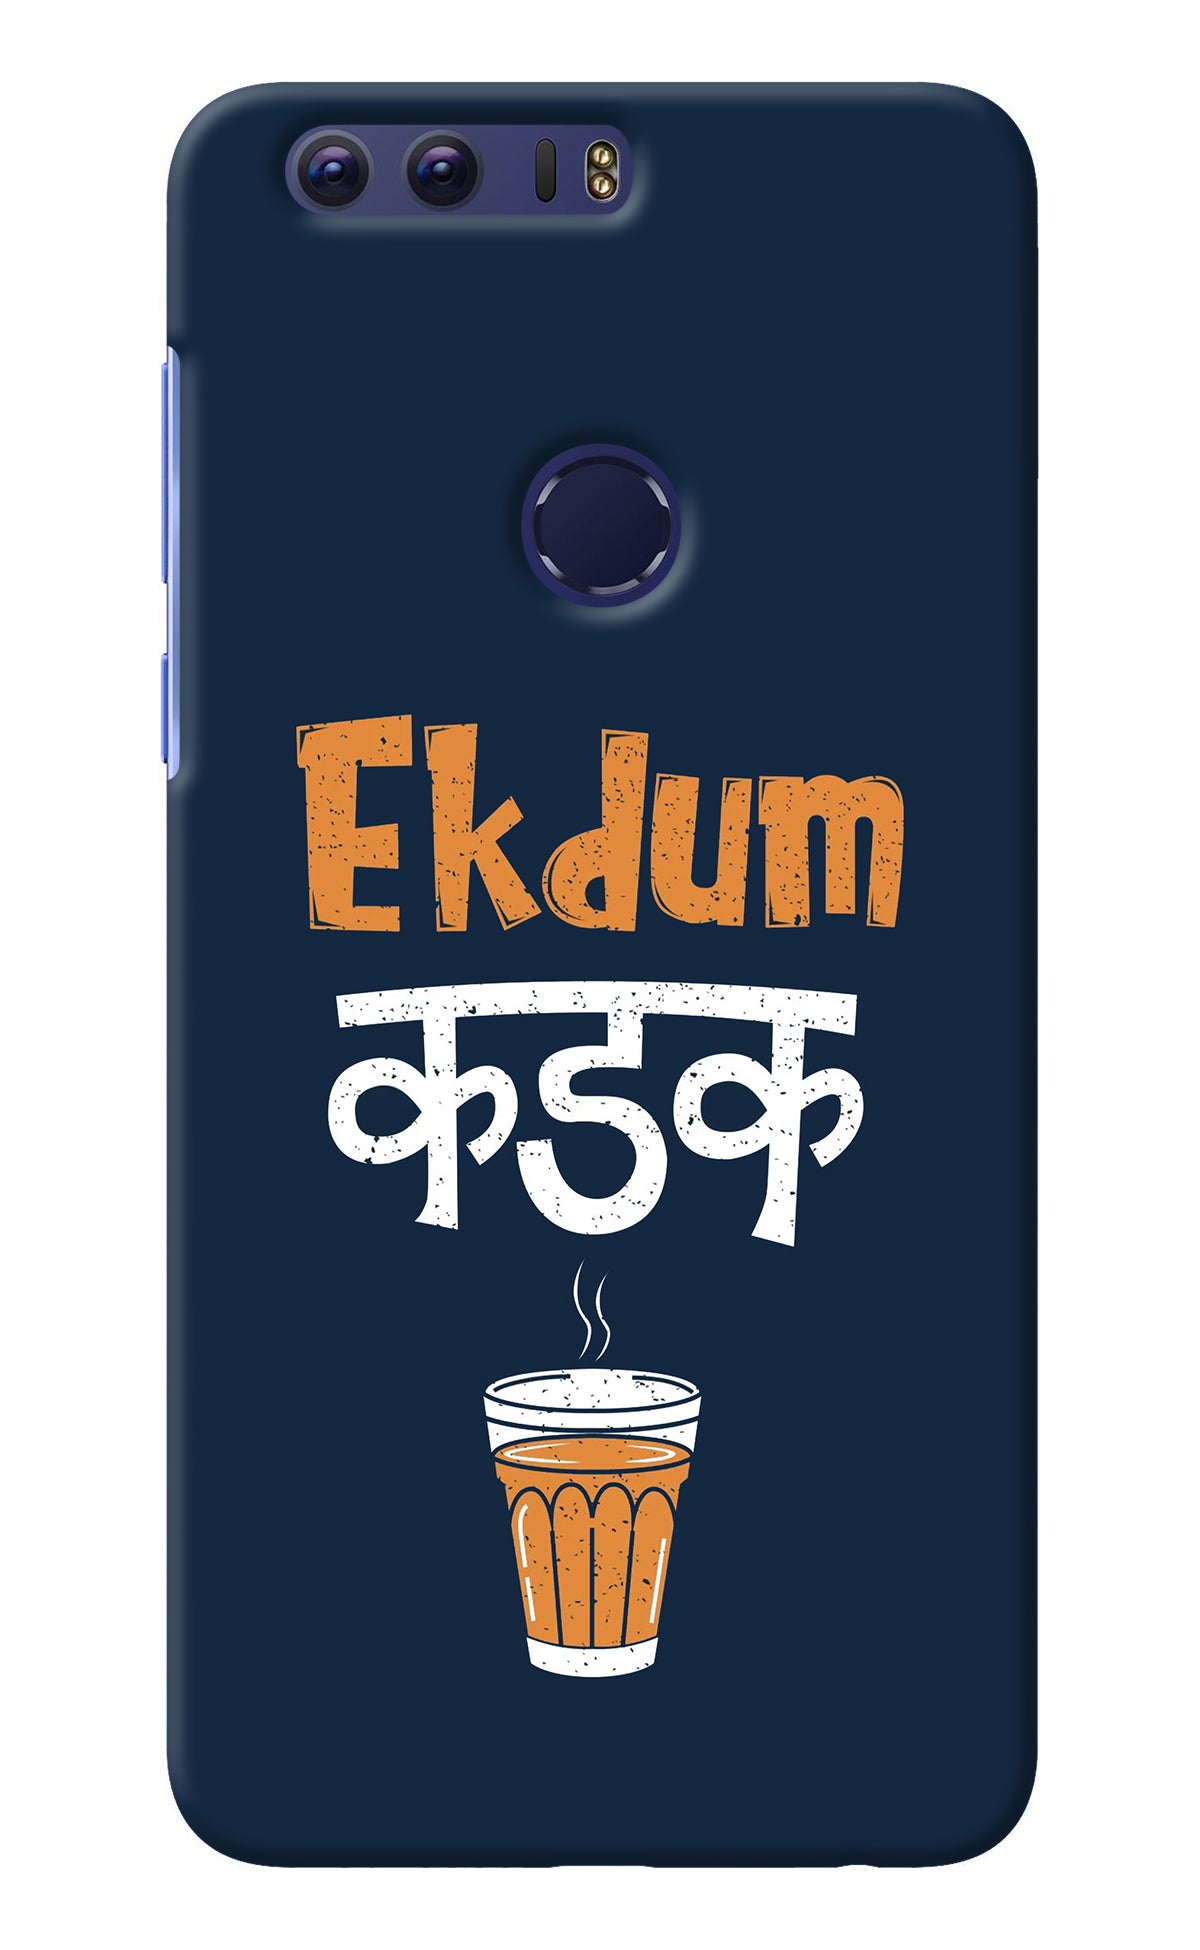 Ekdum Kadak Chai Honor 8 Back Cover